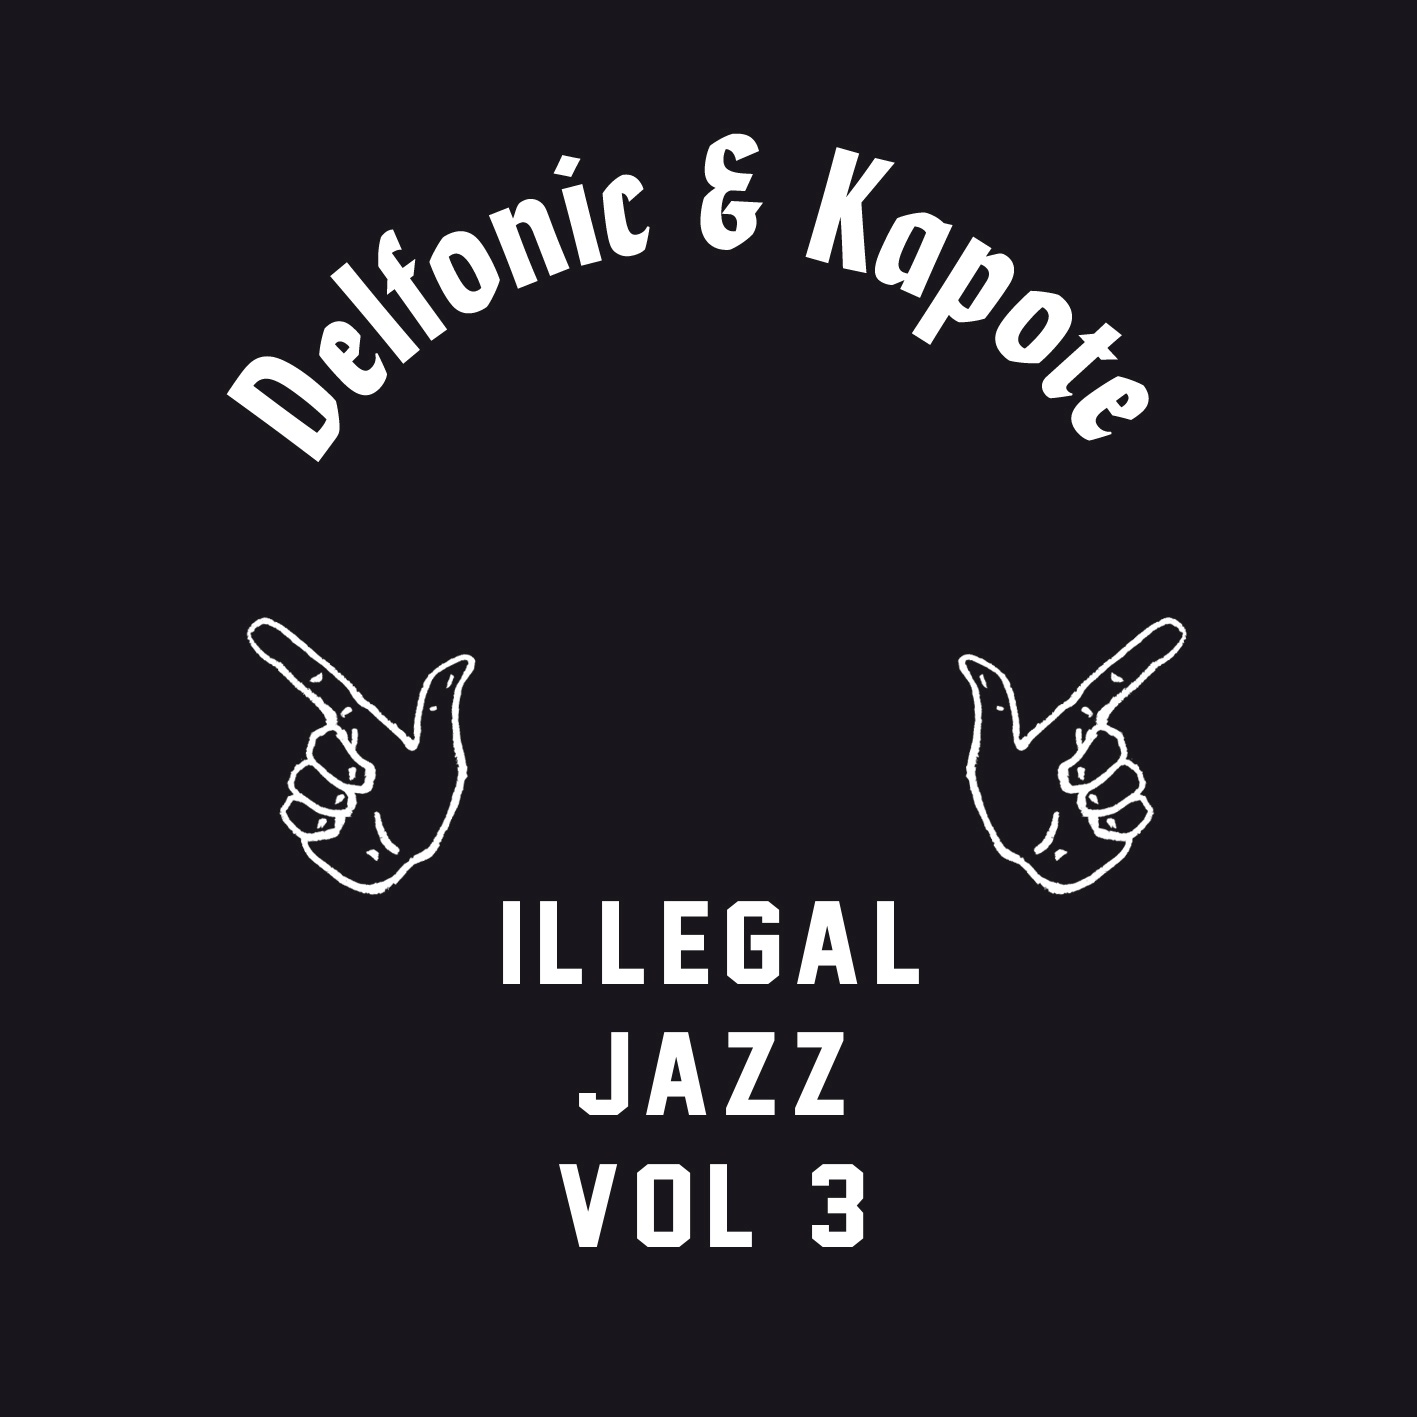 Delfonic & Kapote – Illegal Jazz Vol. 3  [IJR003]